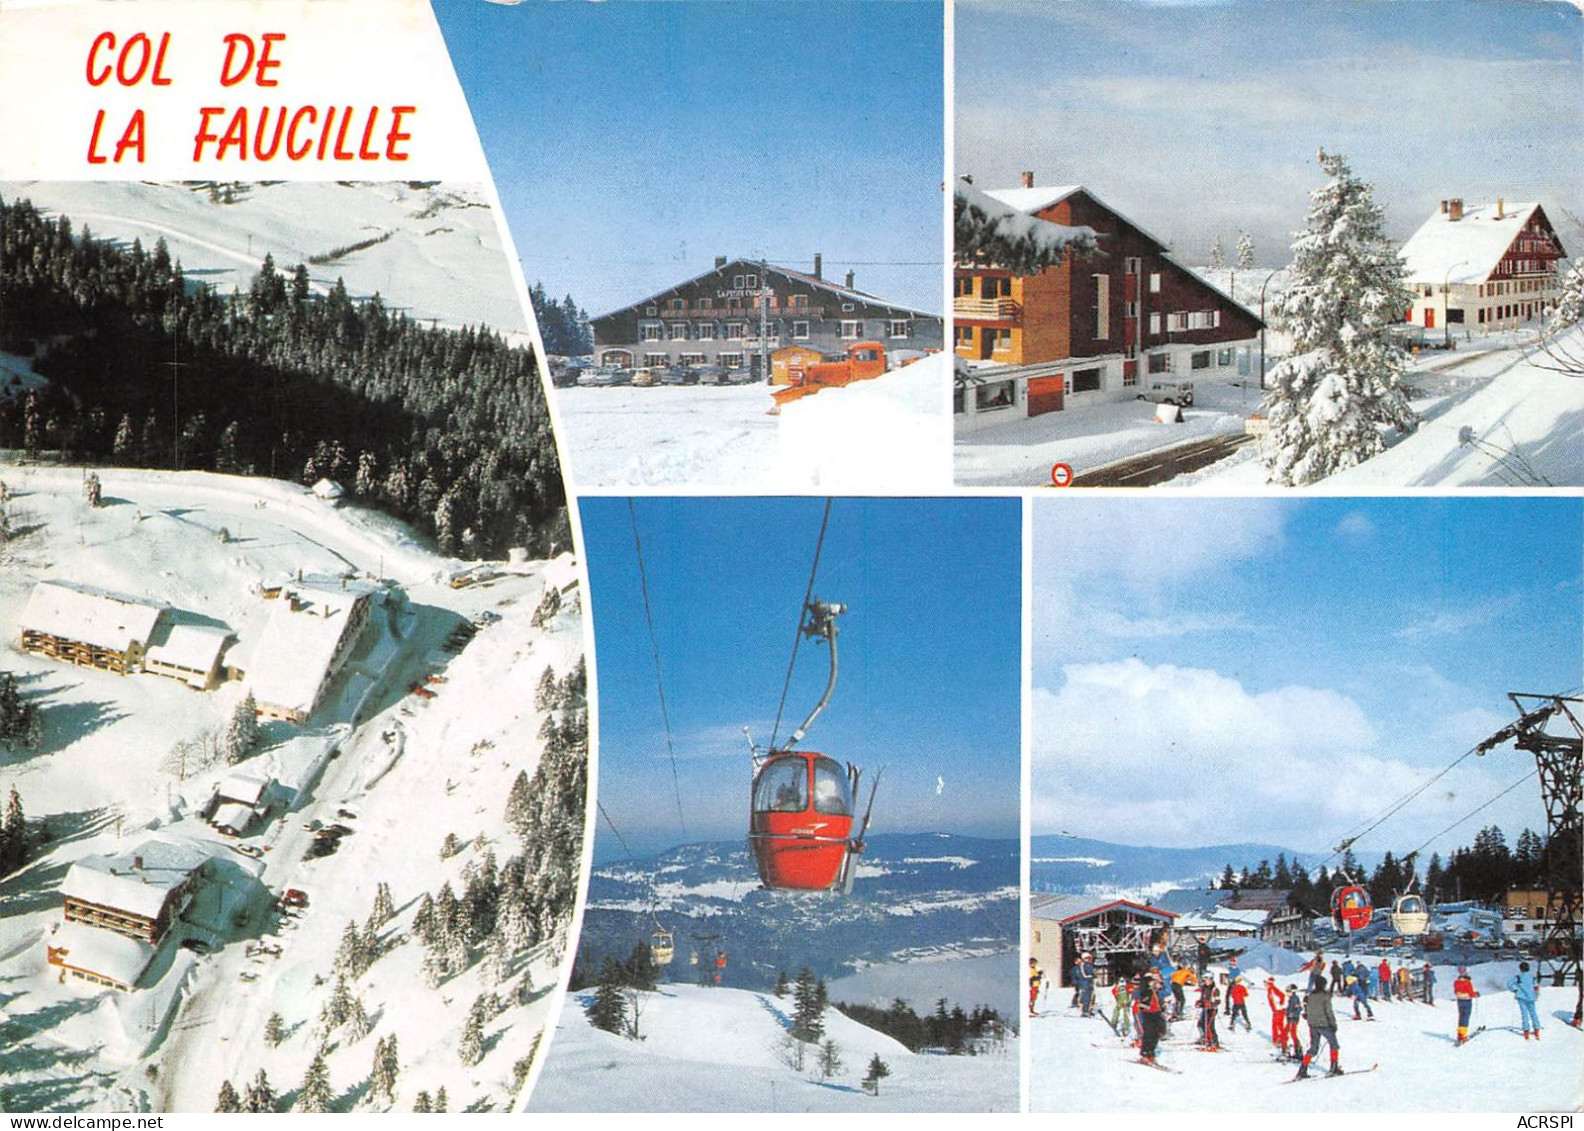 01 Col de la Fauçille lot de 24 cartes-postales          GEX      (Scan R/V) N°   1   \OA1051